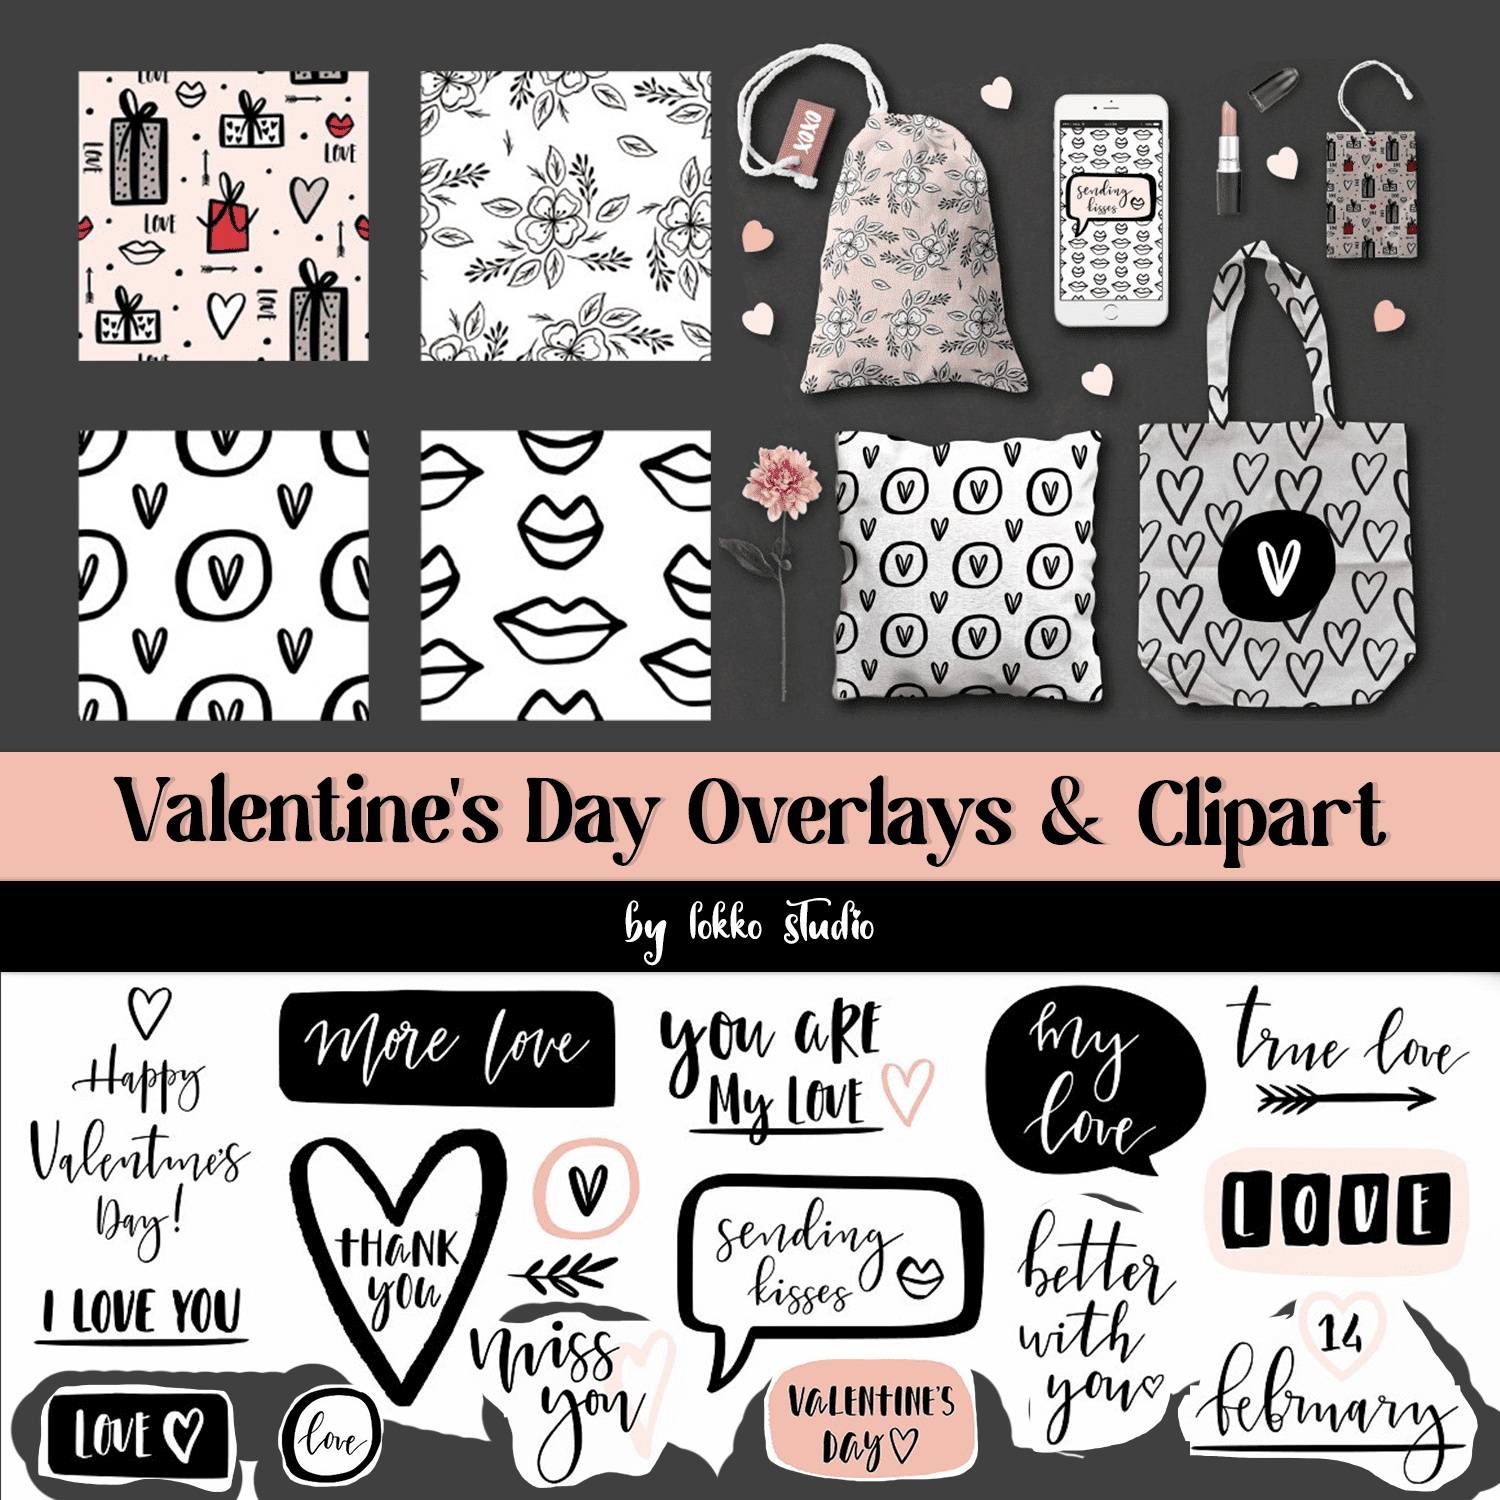 Valentine's Day Overlays & Clipart - Facebook.